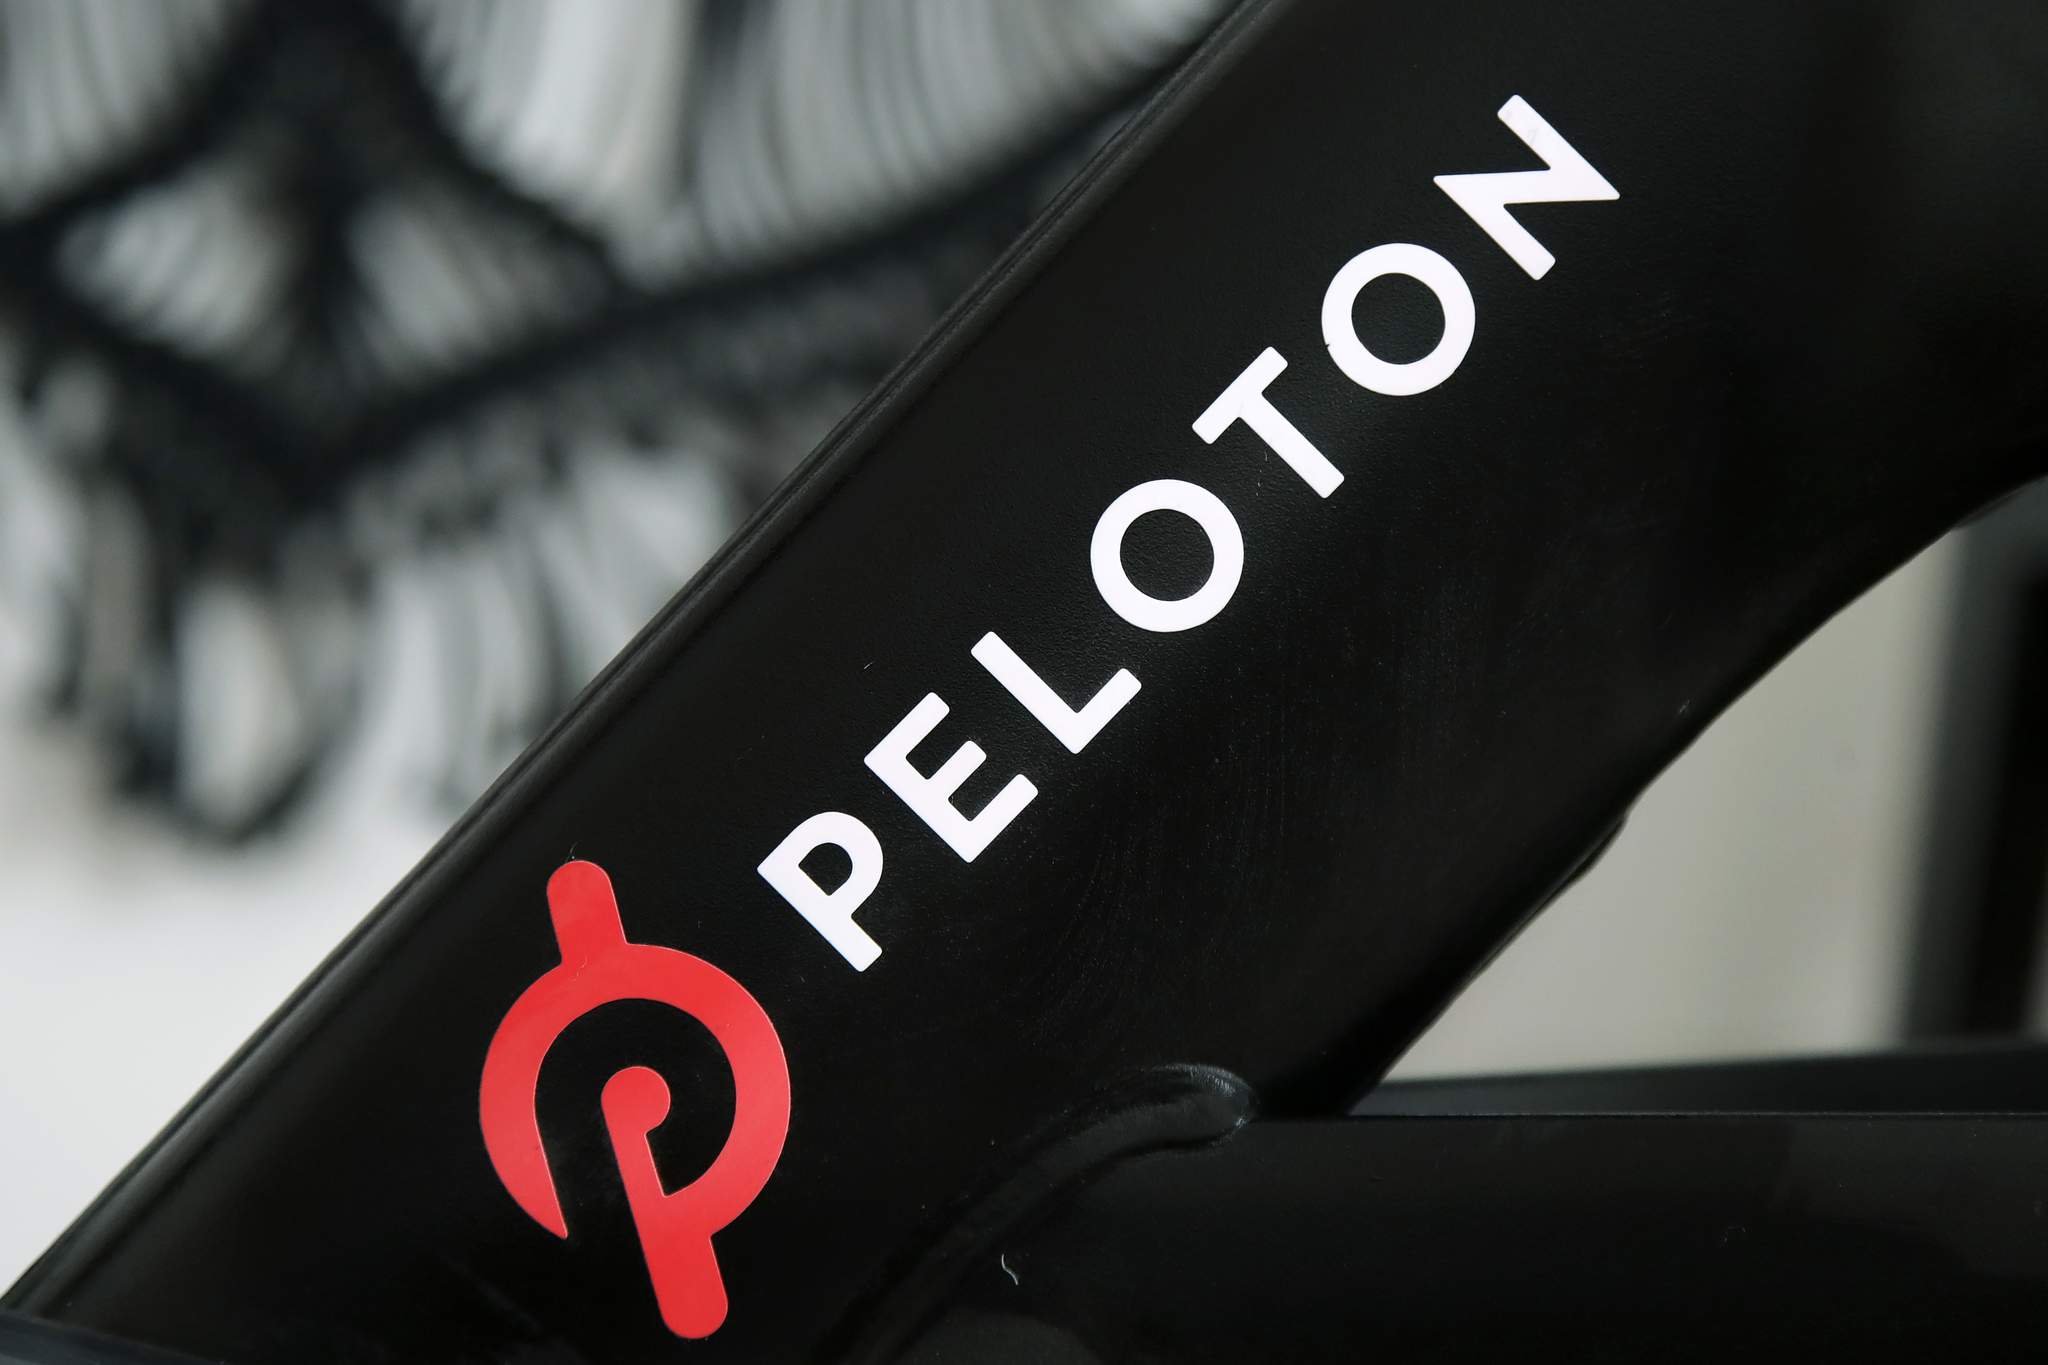 Peloton CEO warns parents after Tread+ machine kills child